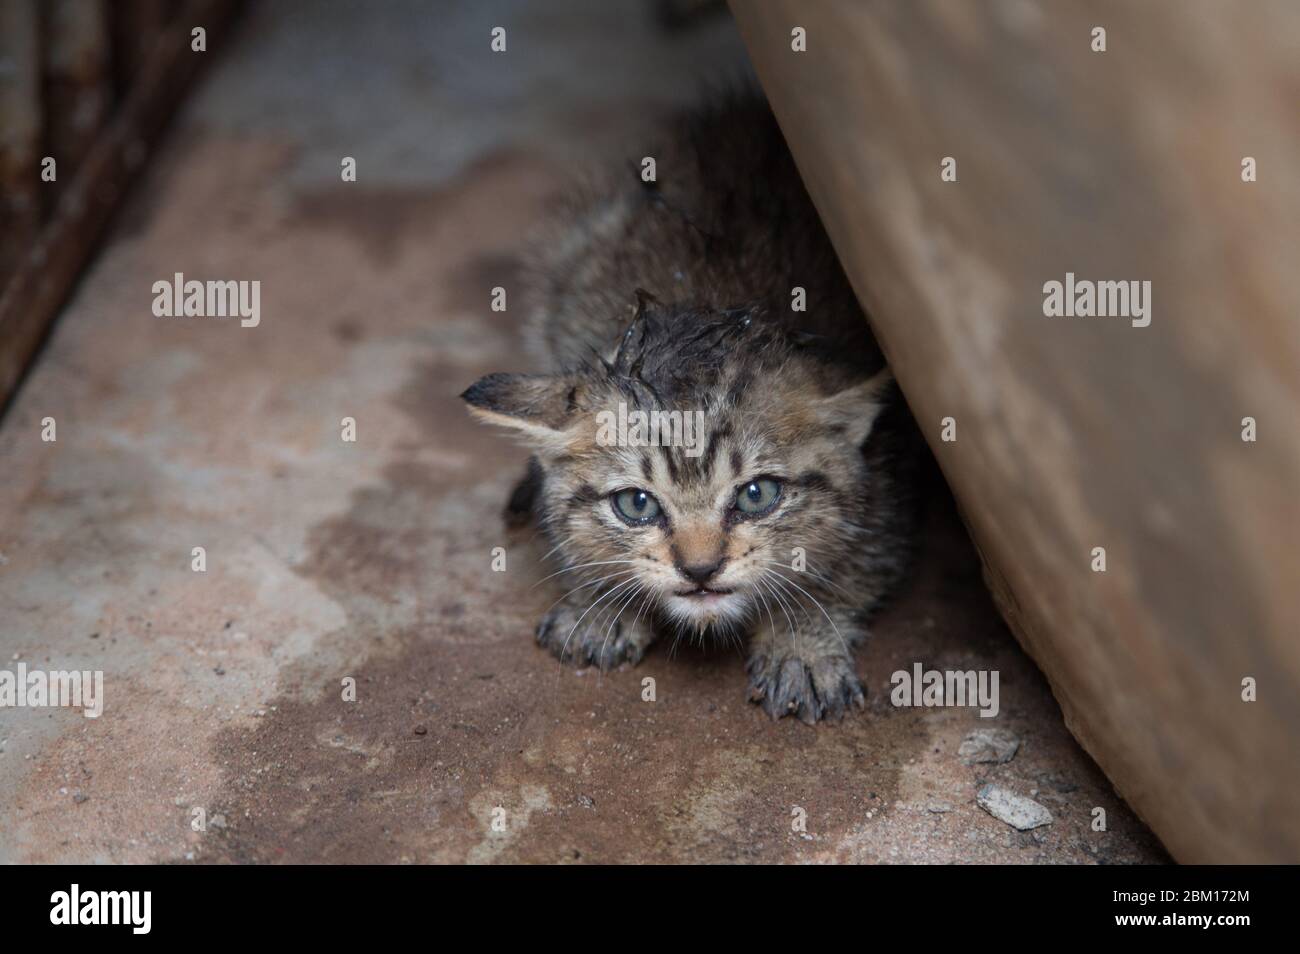 cute newborn cat have fear face under building Stock Photo